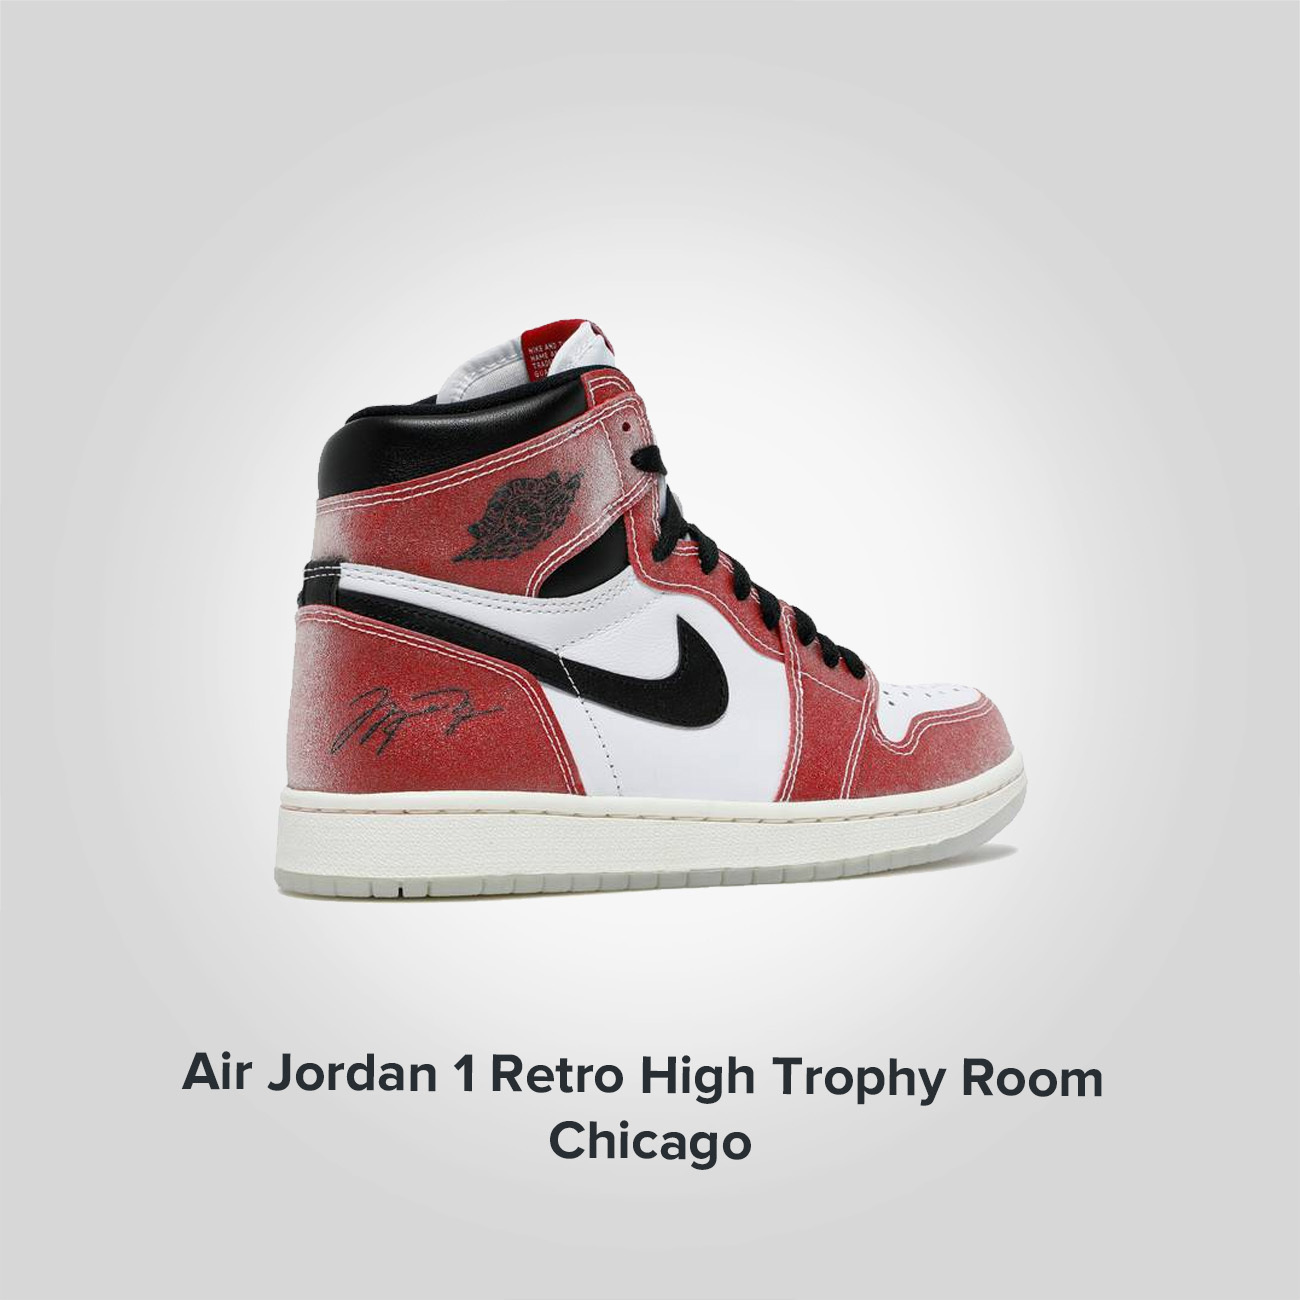 Jordan 1 Retro High Trophy Room Chicago